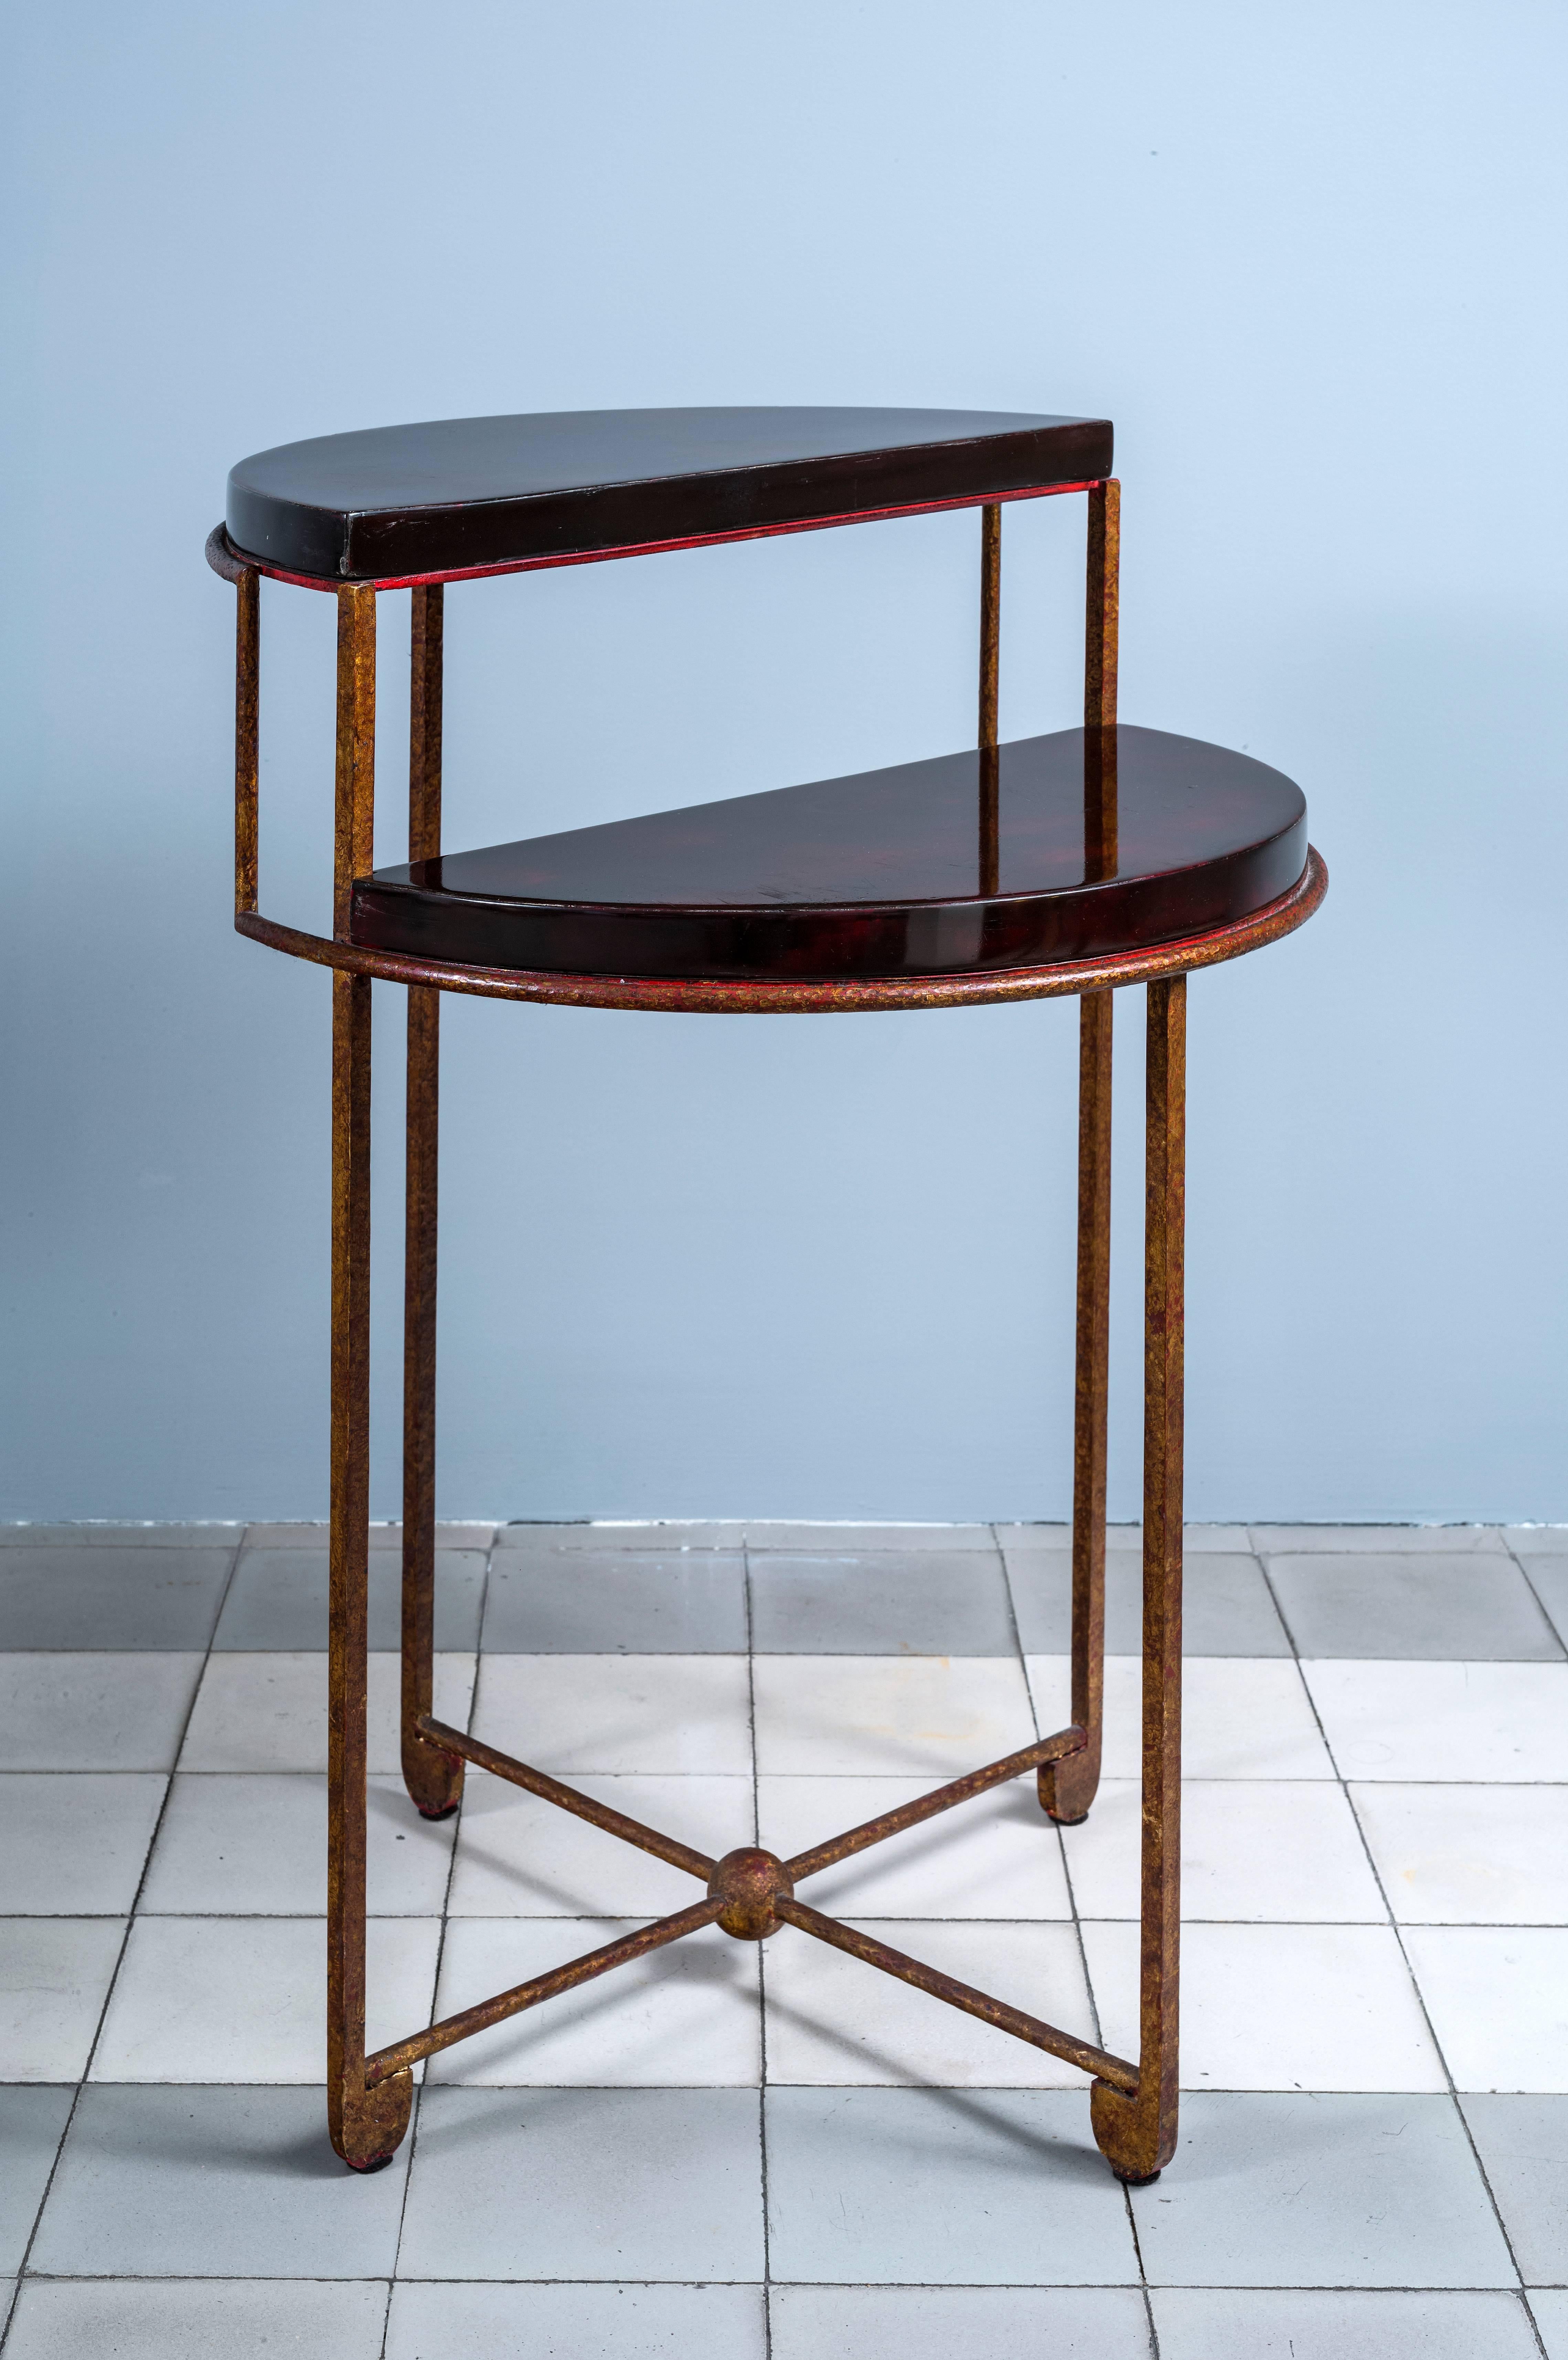 Leon Jallot, 1874-1967
France

Pedestal table for the 